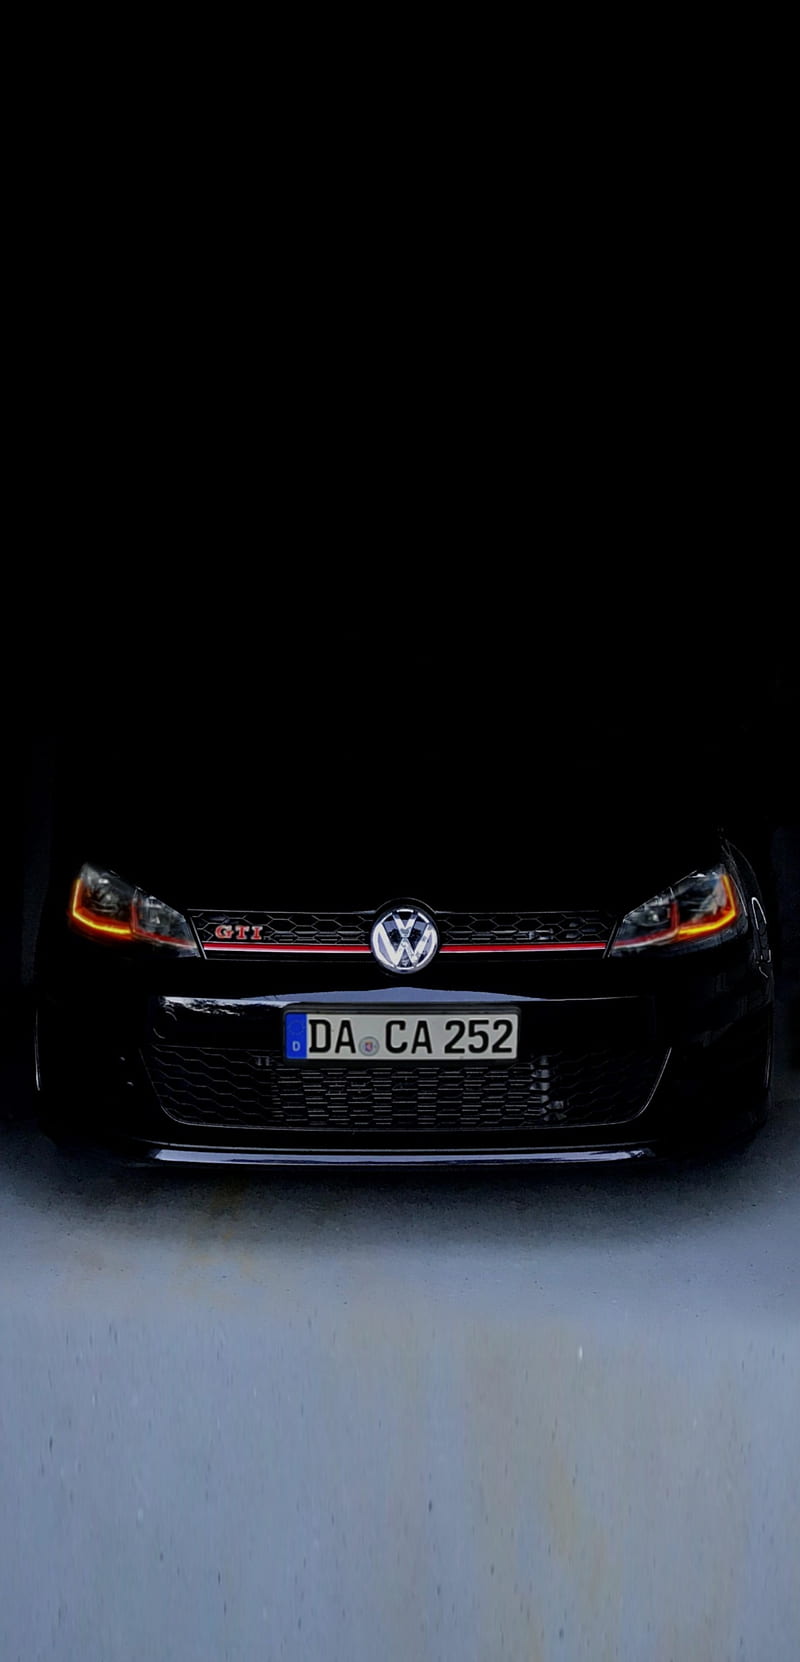 VW Golf 7 GTI, car, carros, engineer, performance, power, turbo